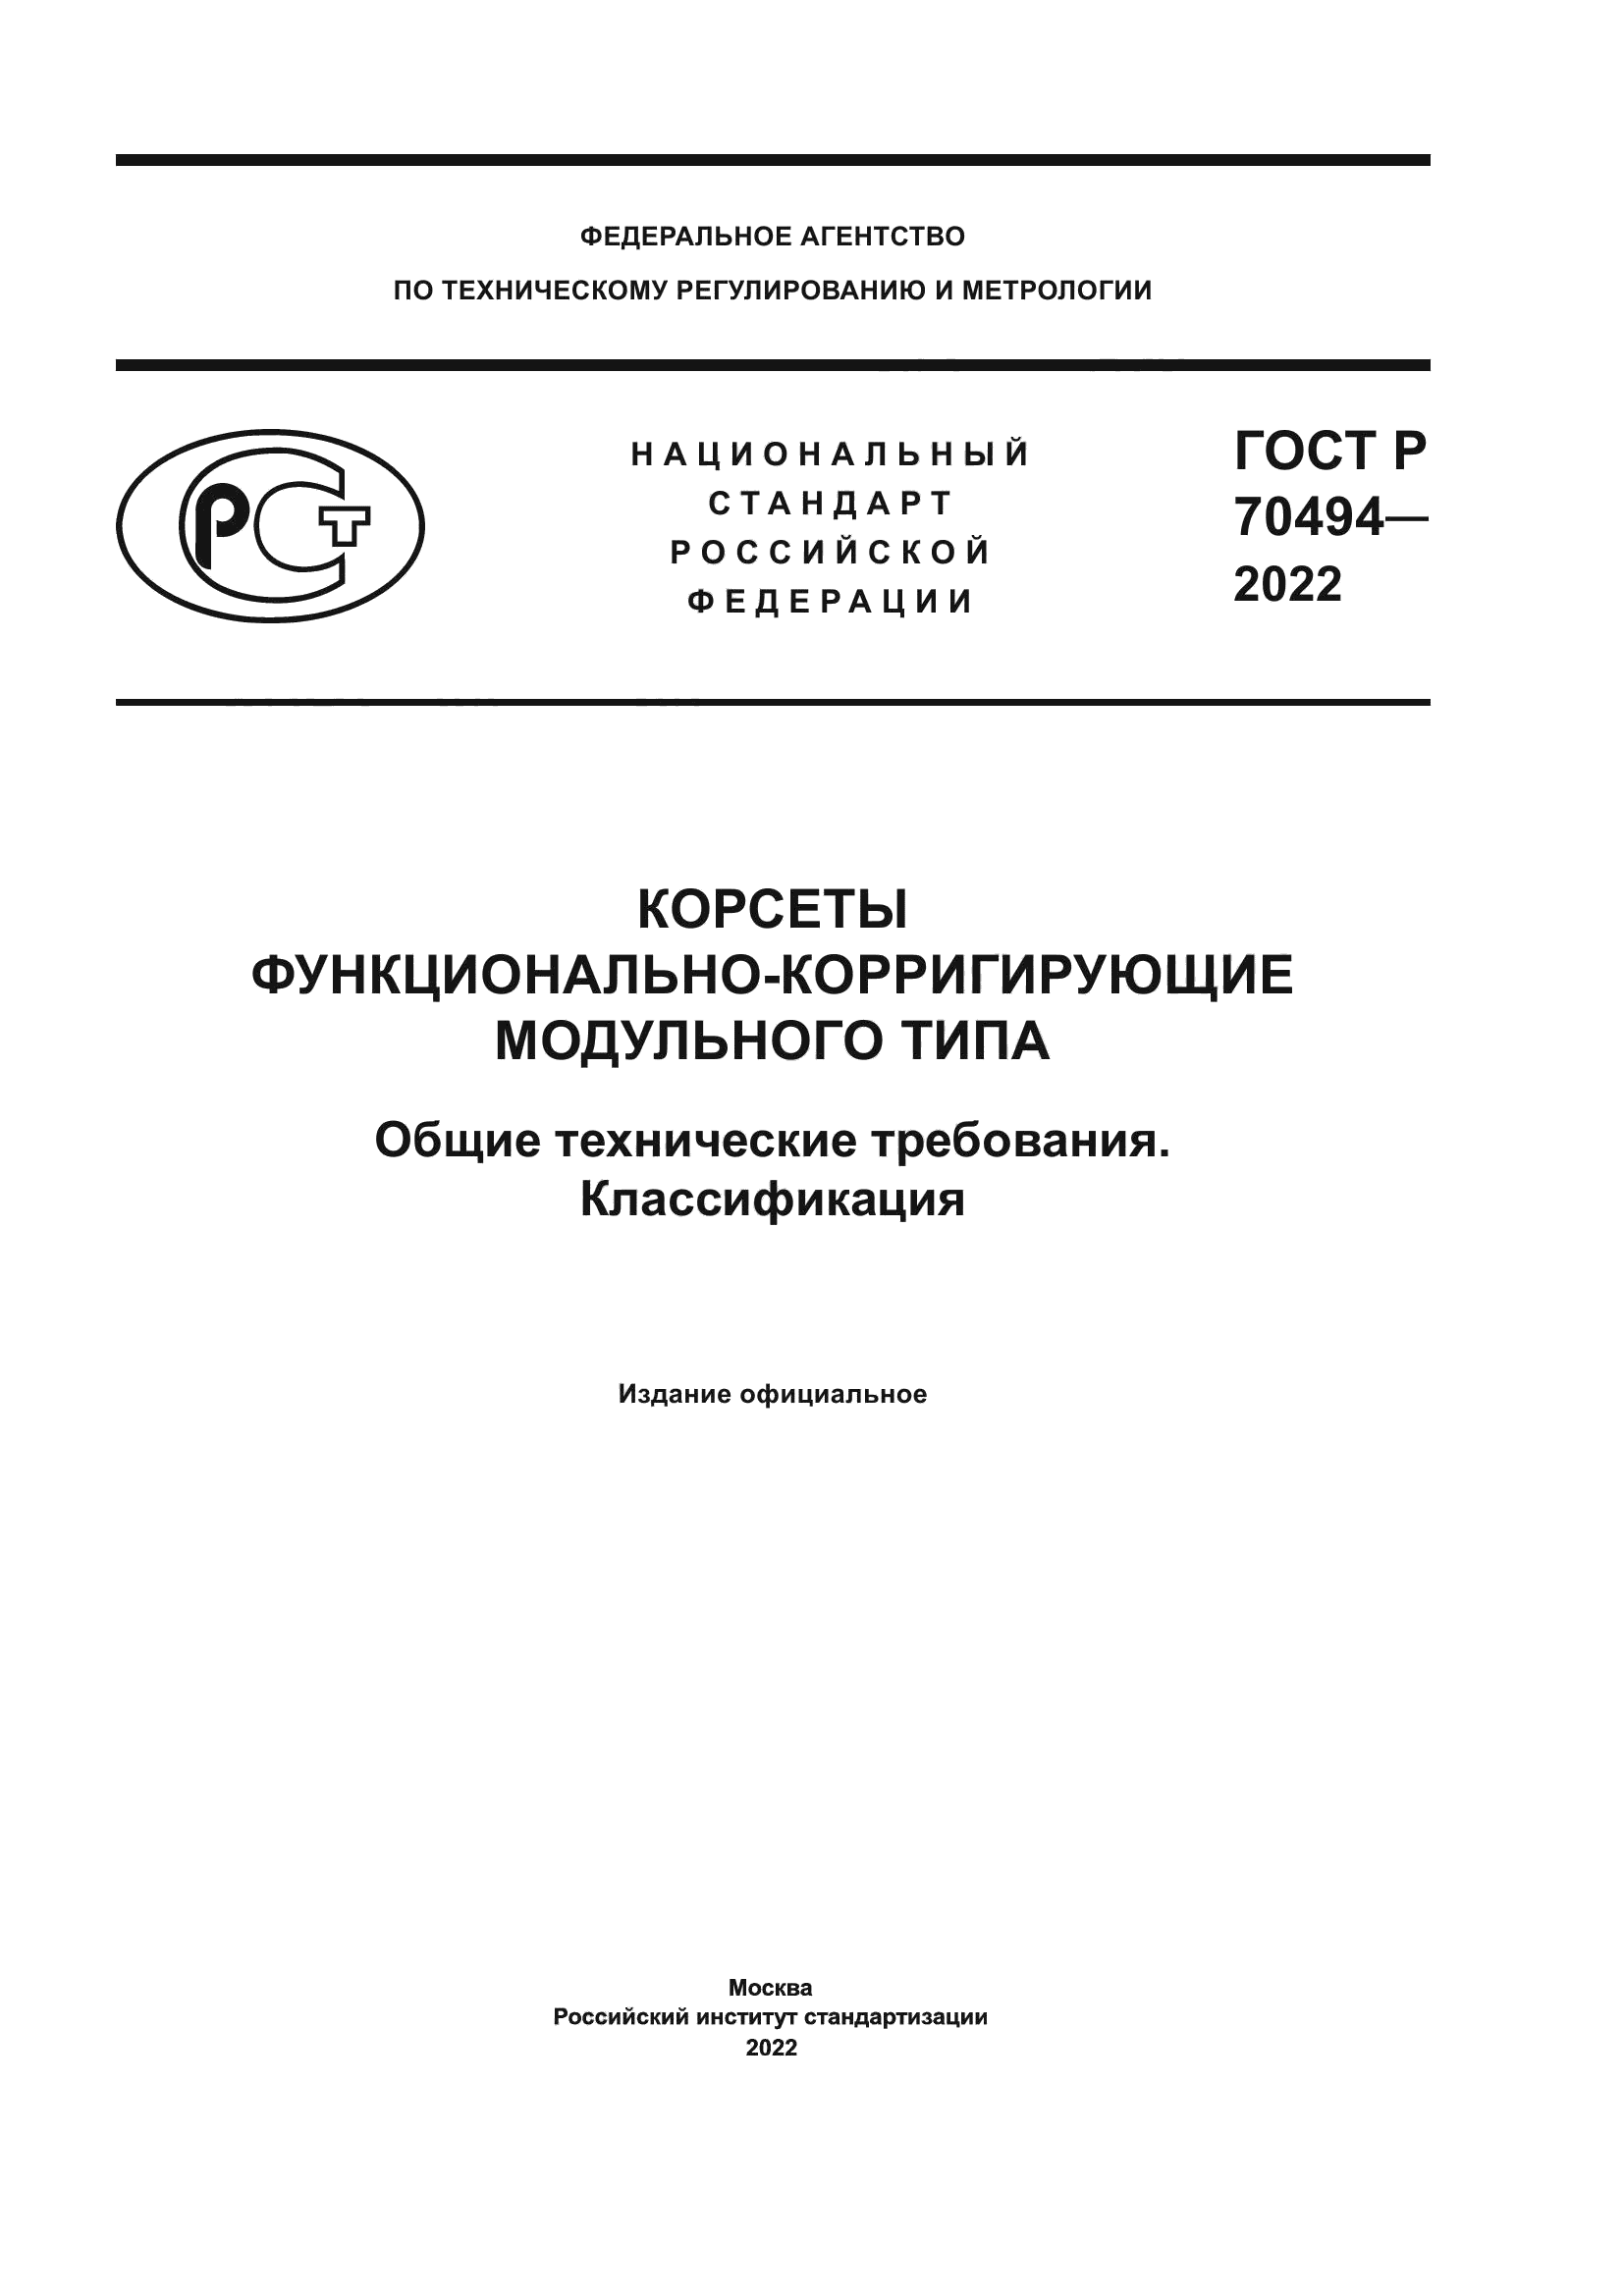 ГОСТ Р 70494-2022